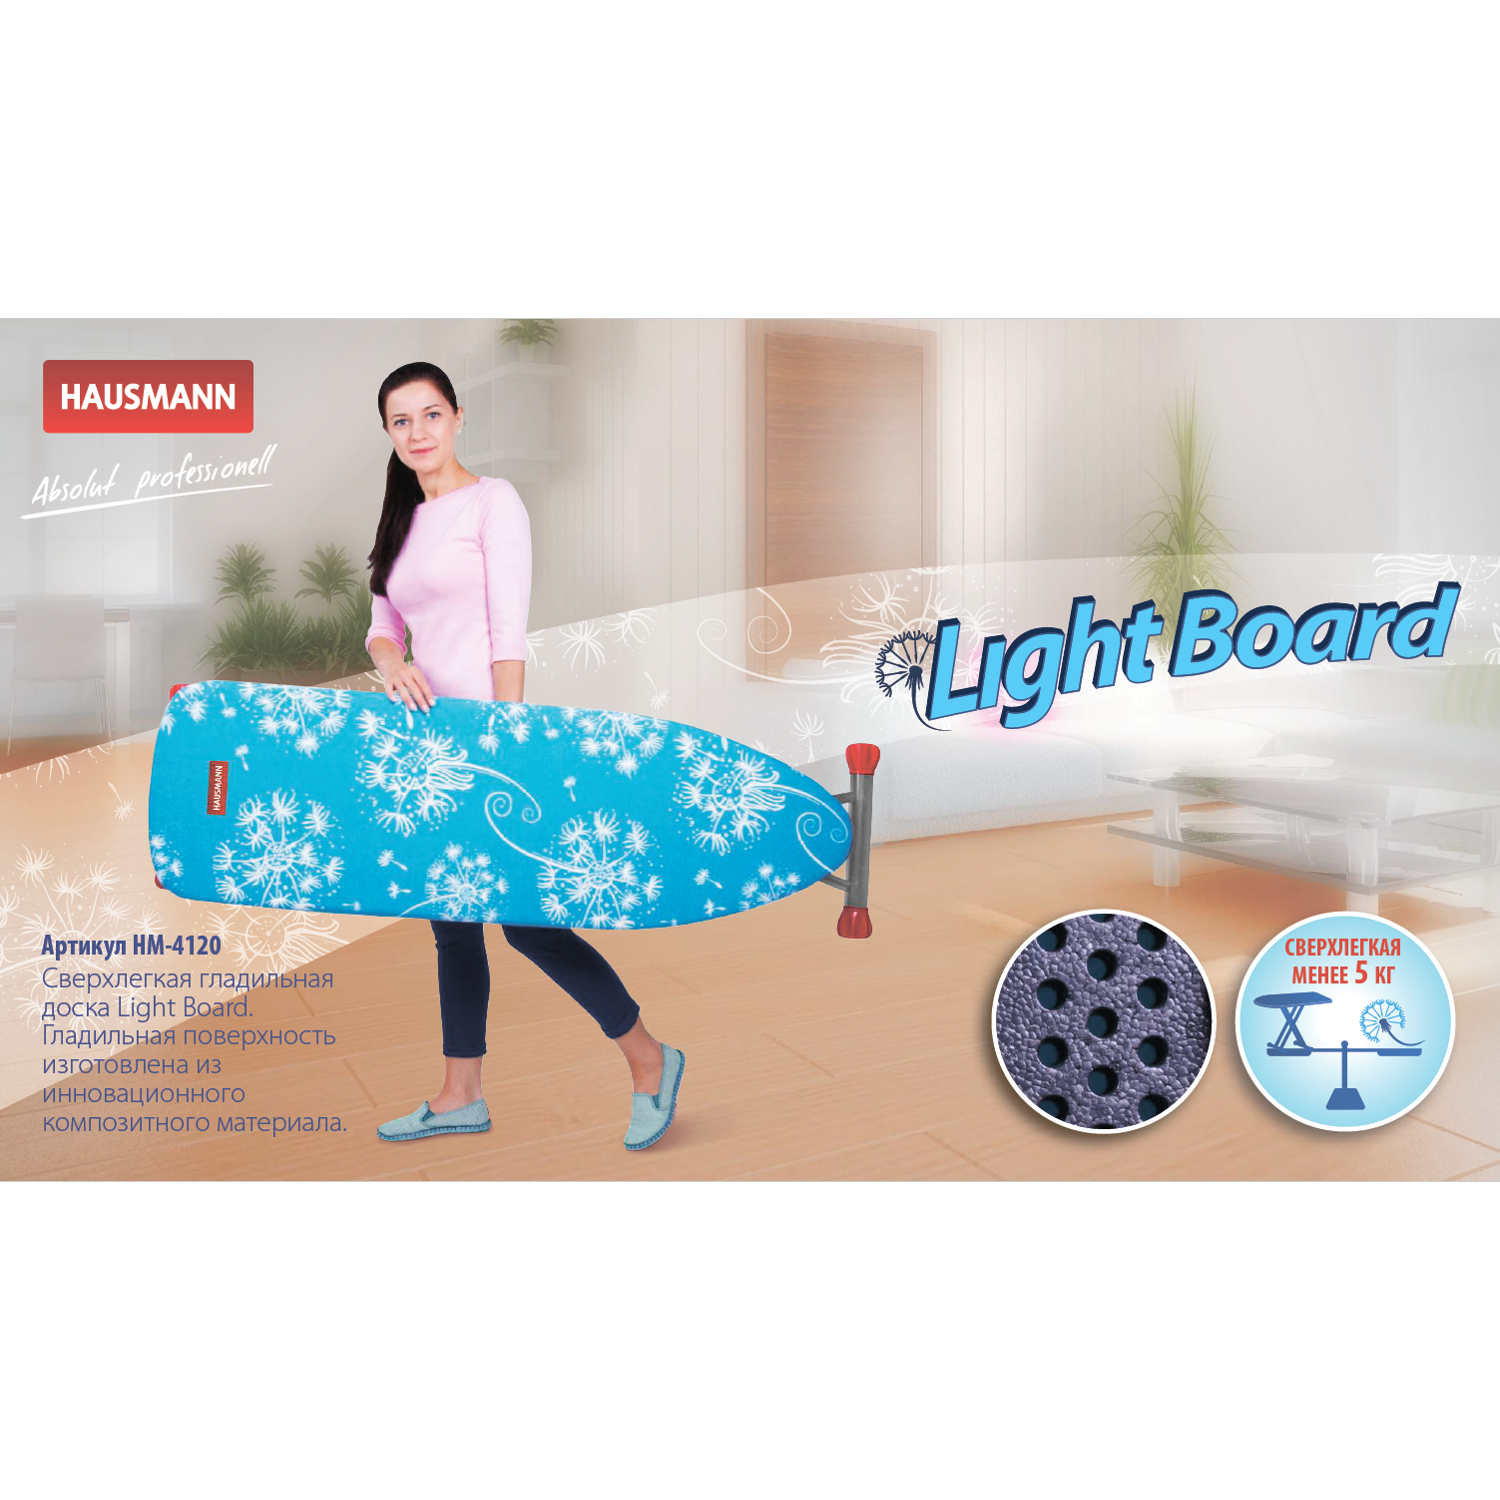 Доска гладильная сверхлегкая Light Board (Hausmann HM-4120)